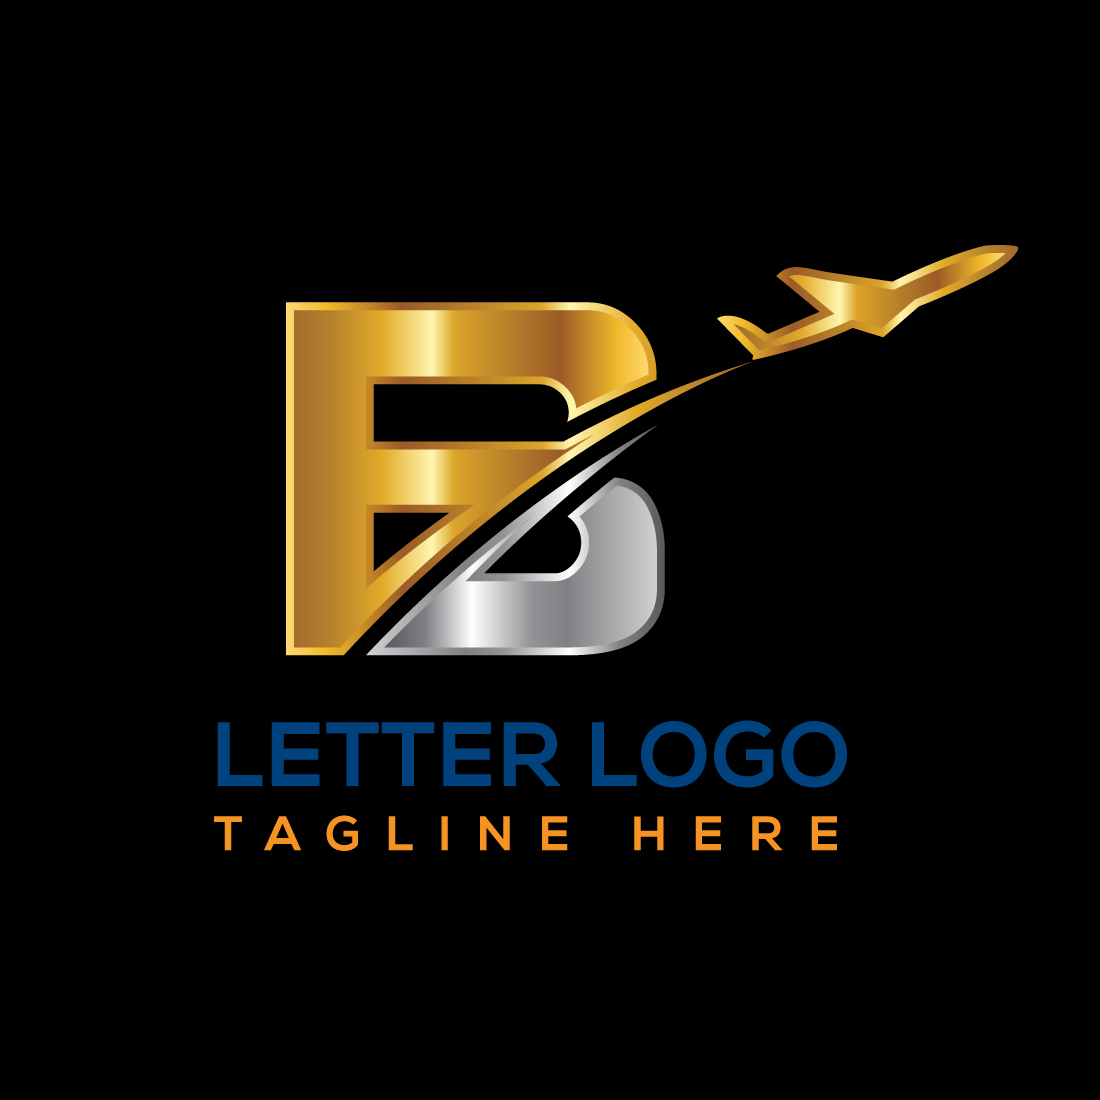 Airplane Logo Letter B Design cover image.